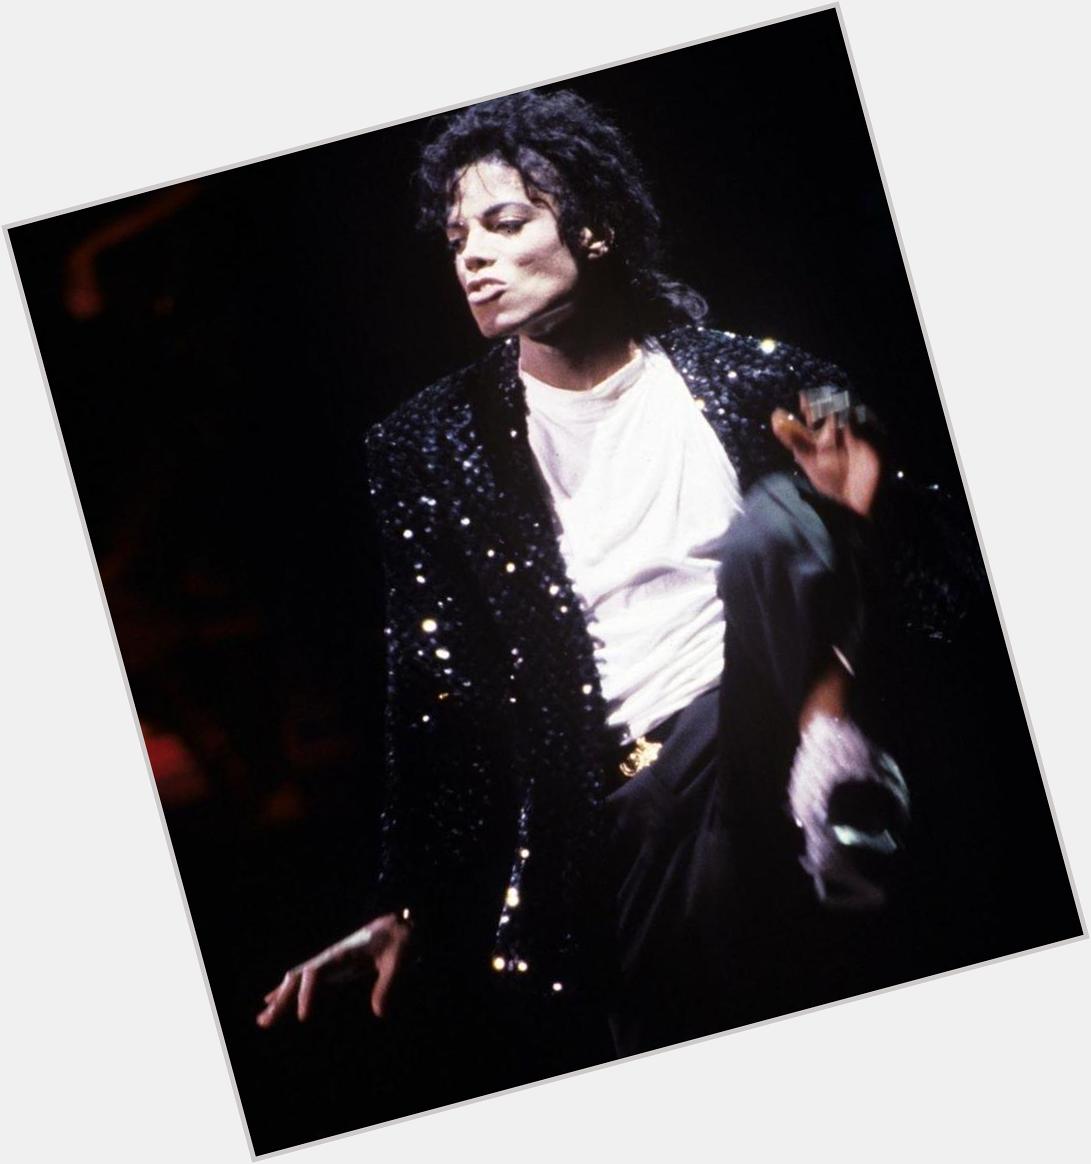 Happy 57th birthday Michael Jackson! 